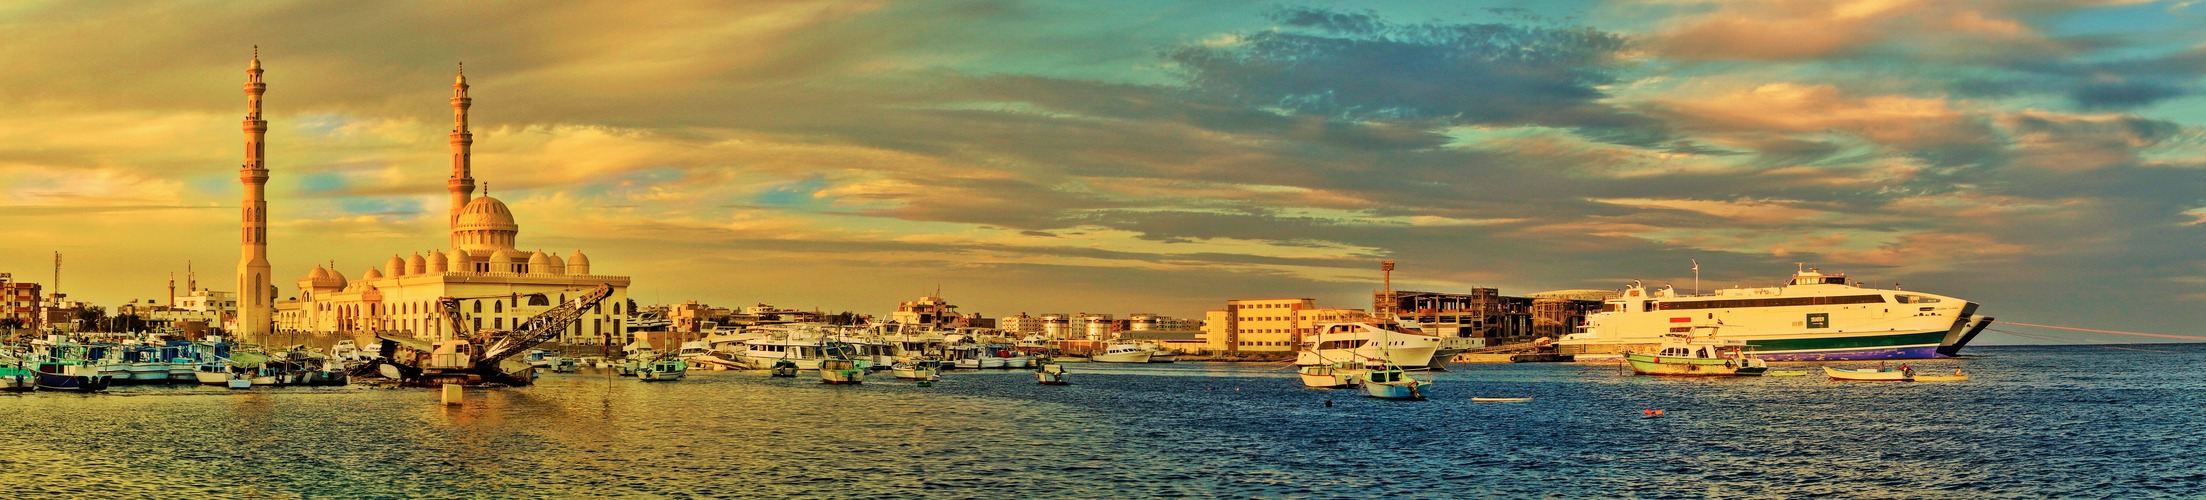 Hurghada Panorama